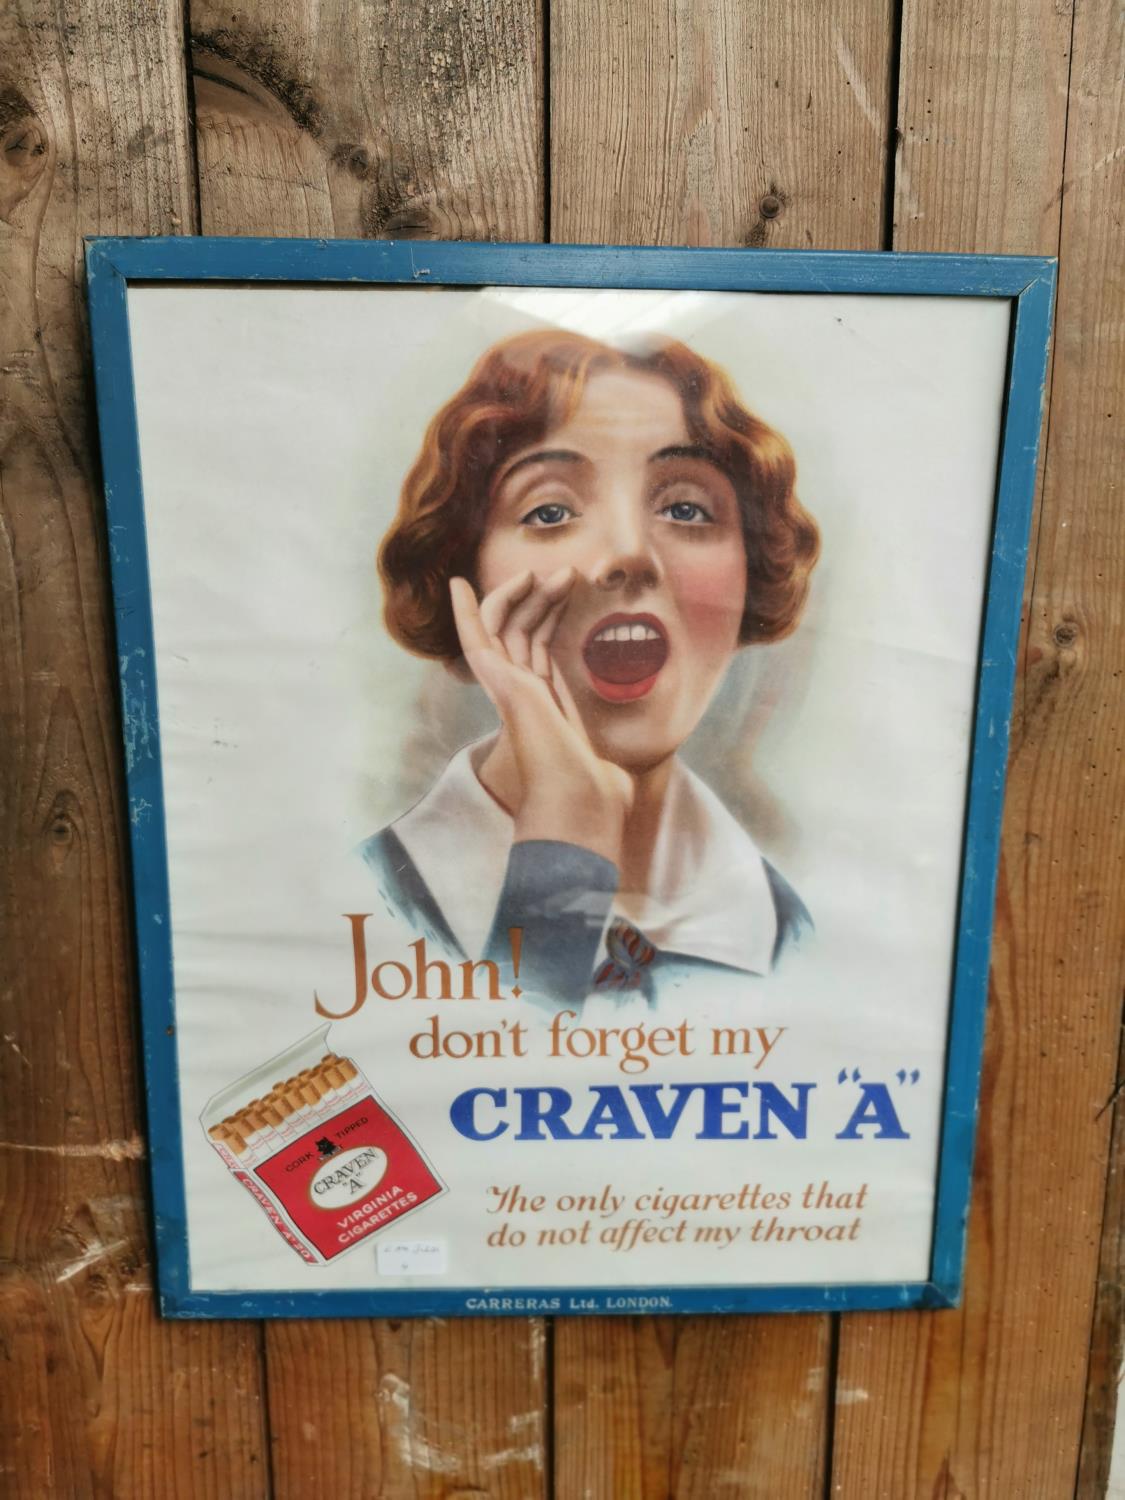 Craven A cigarettes advertising sign.